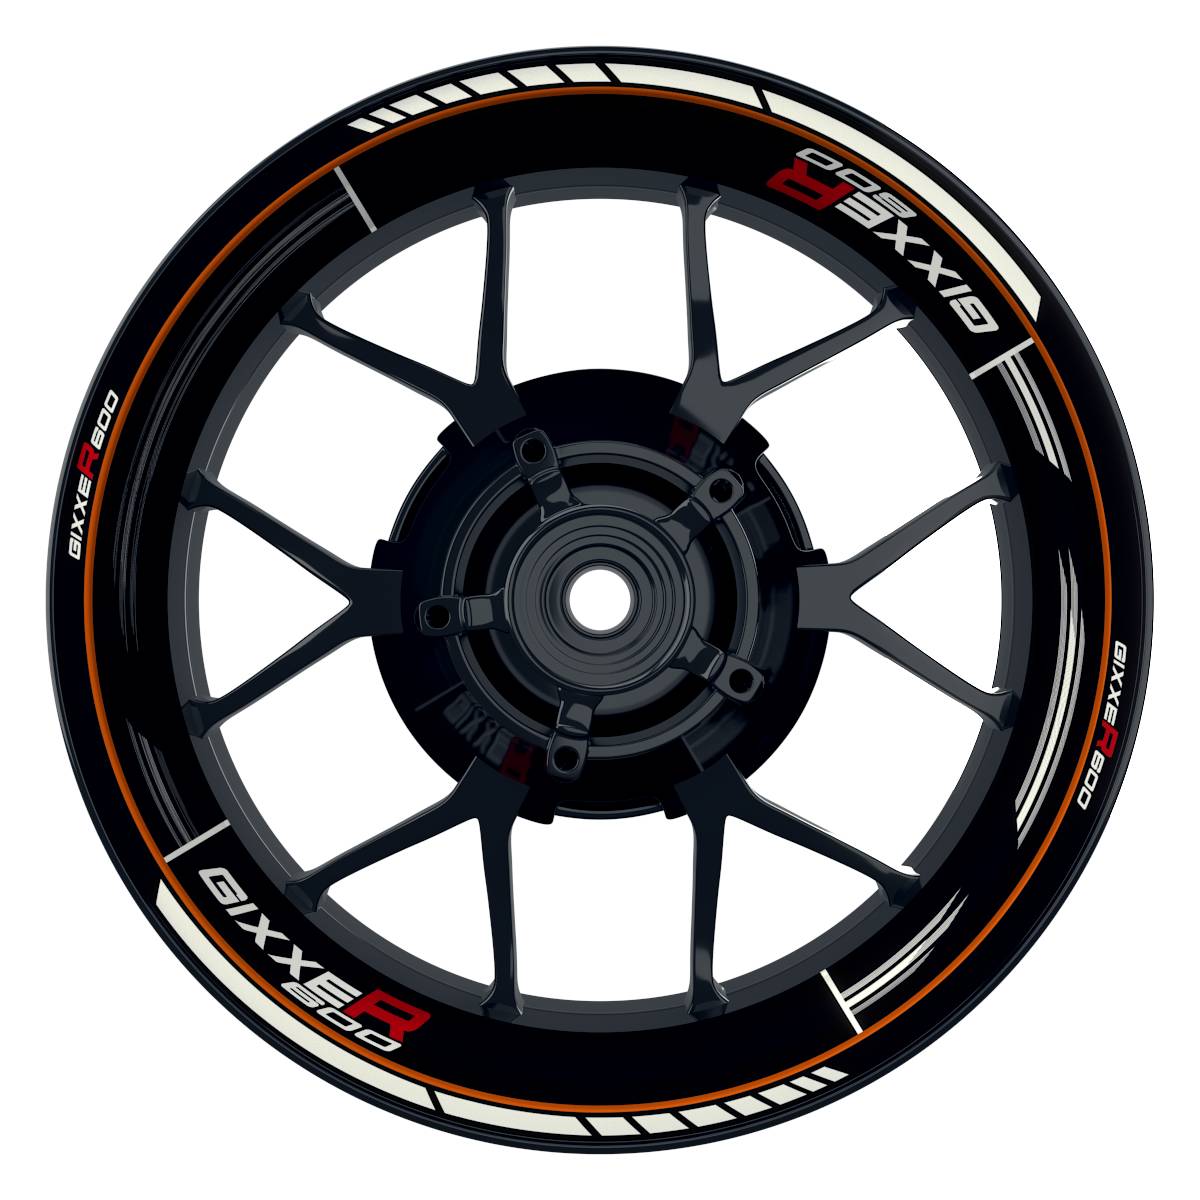 GIXXER600 Scratched schwarz orange Wheelsticker Felgenaufkleber